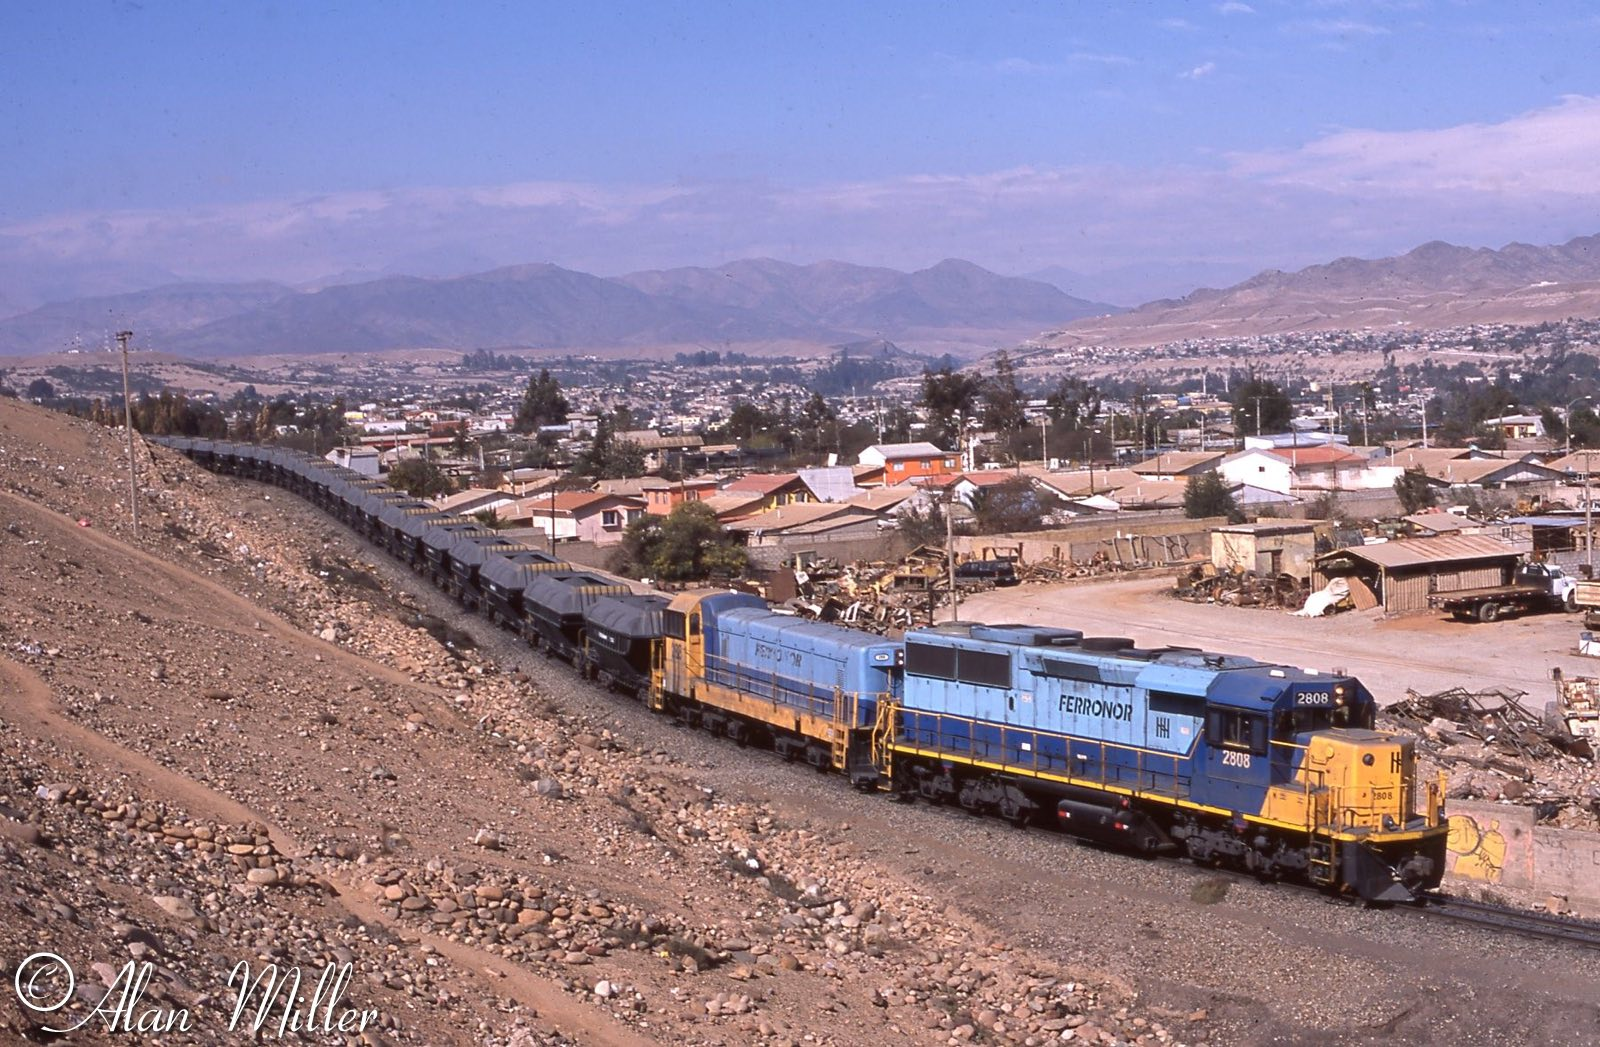 GP49s in Chile